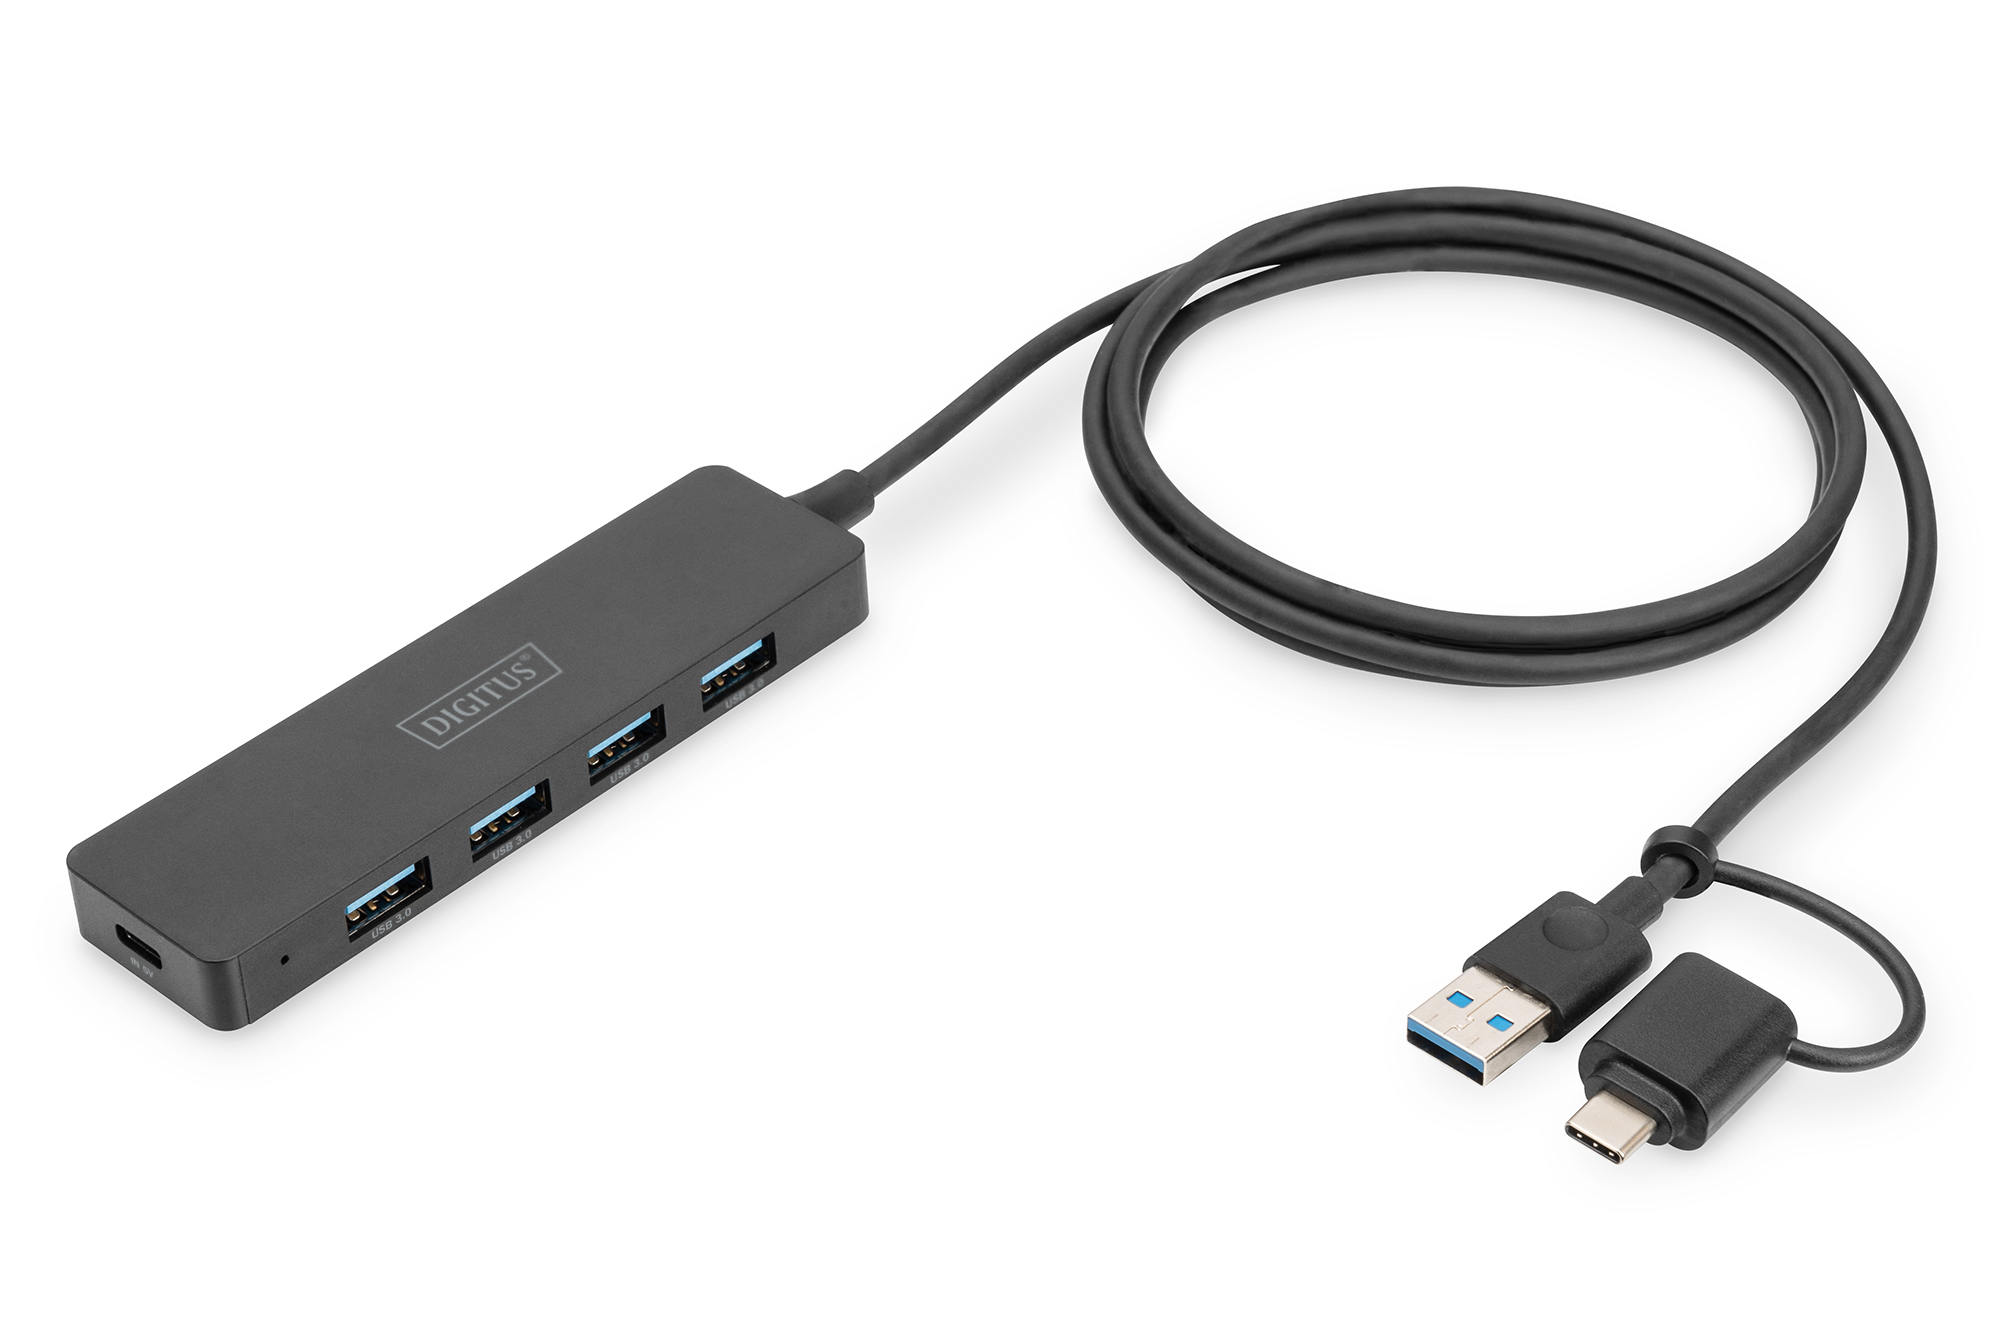 DIGITUS by ASSMANN Shop  Kabel und Adapter / USB-Kabel / USB- Verlängerungskabel